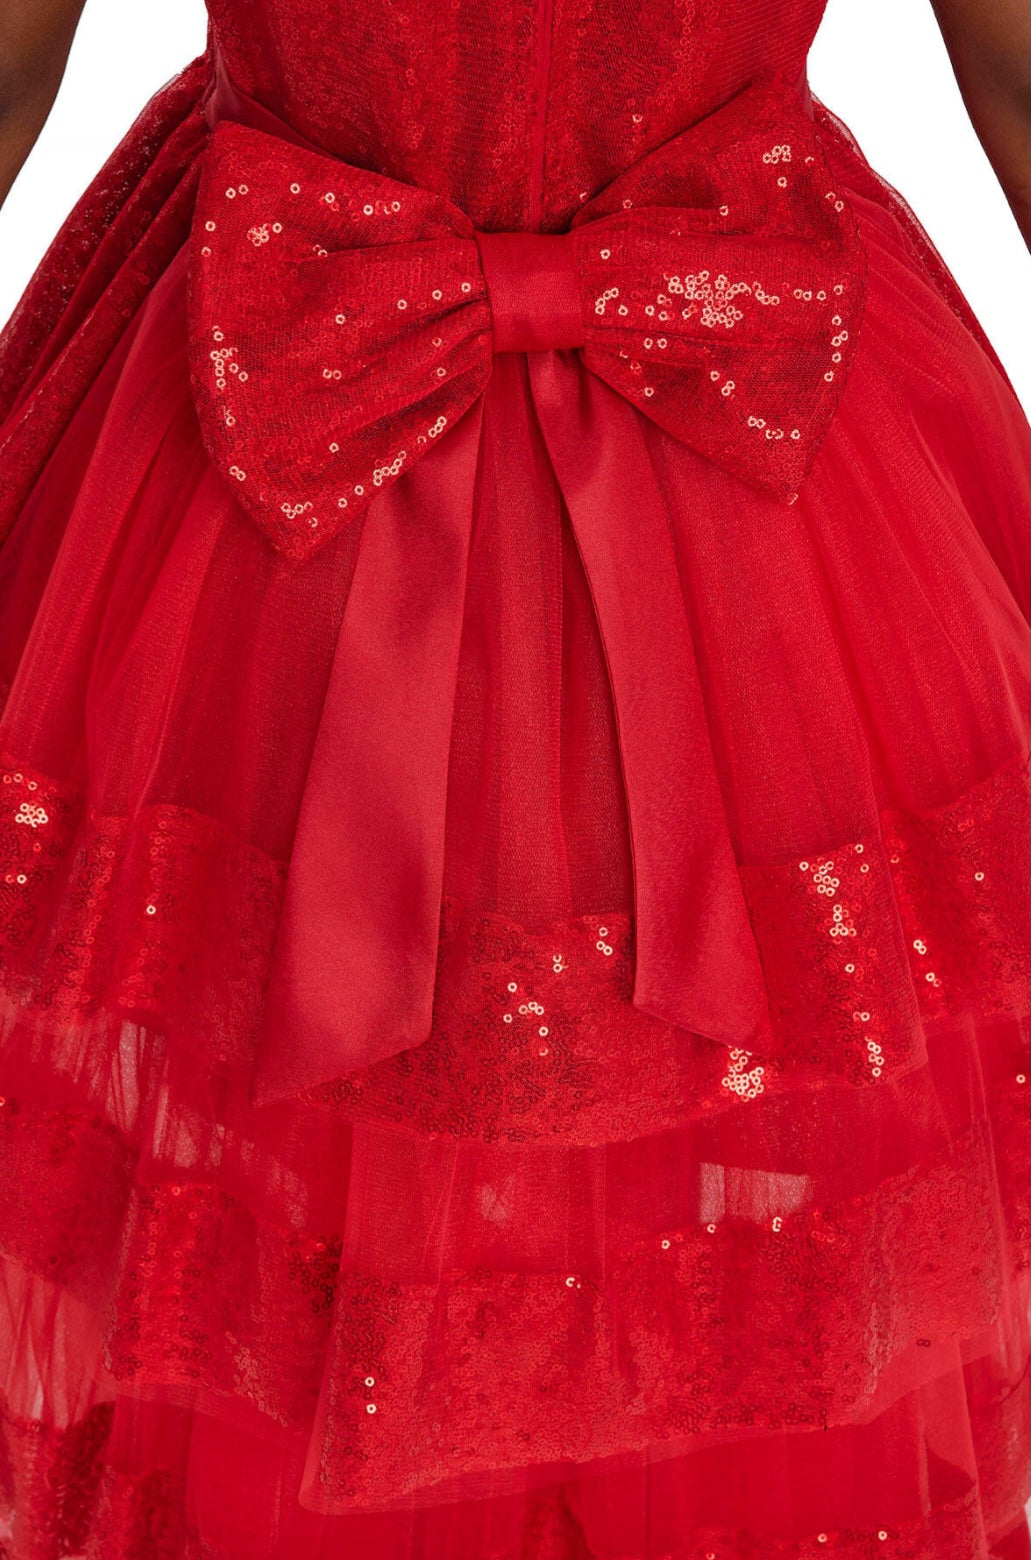 Red Heart Neckline Girl Child Dress